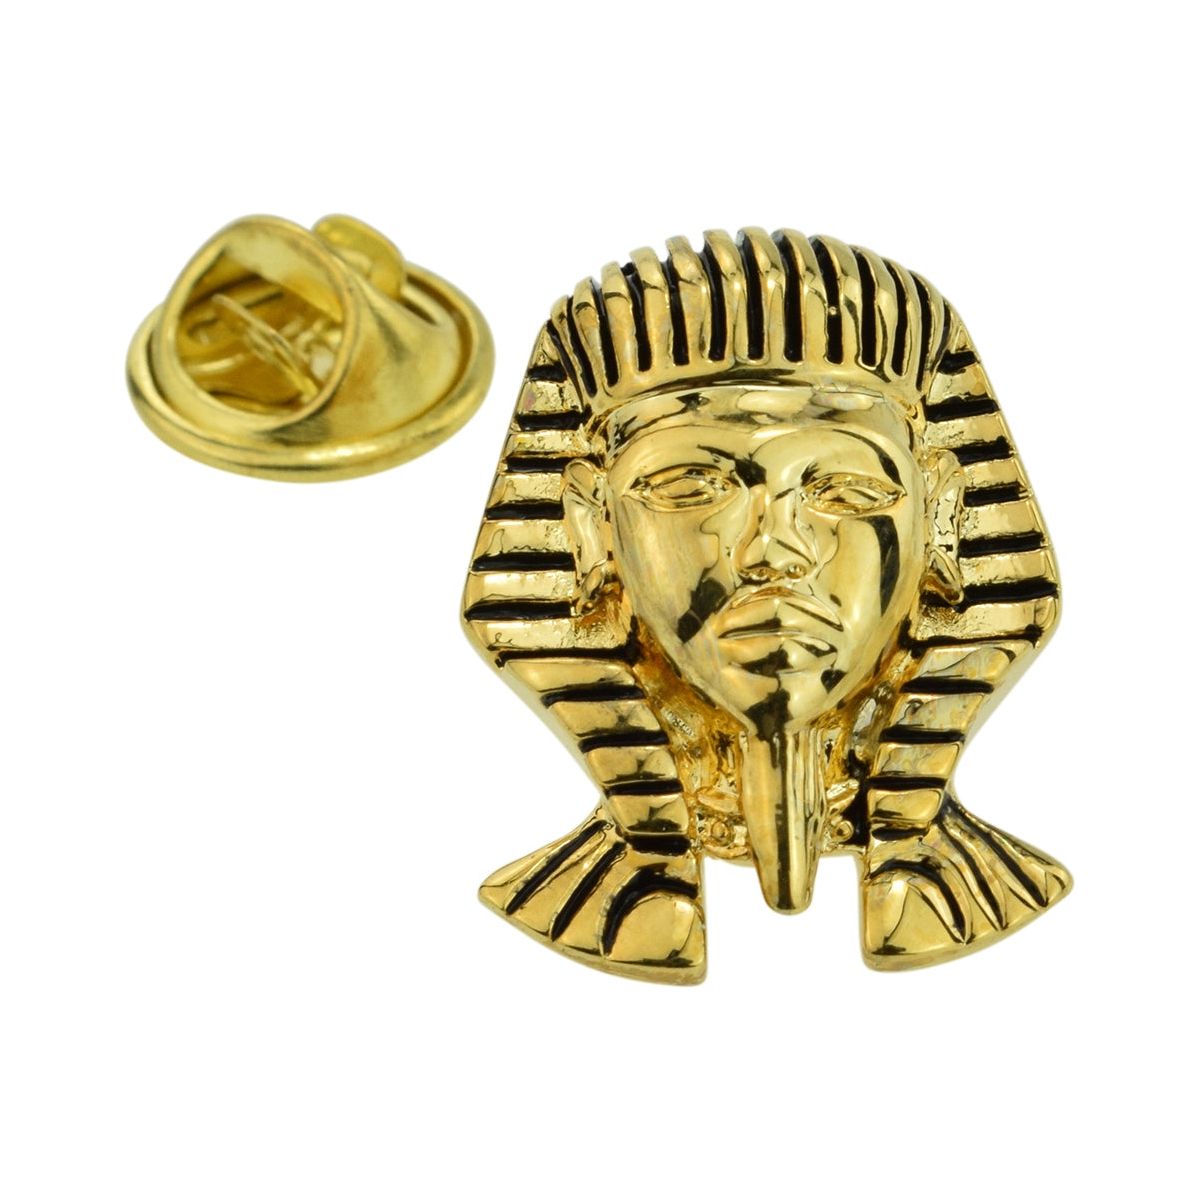 Detailed Pharaoh King Tut Mask Lapel Pin Badge - Ashton and Finch